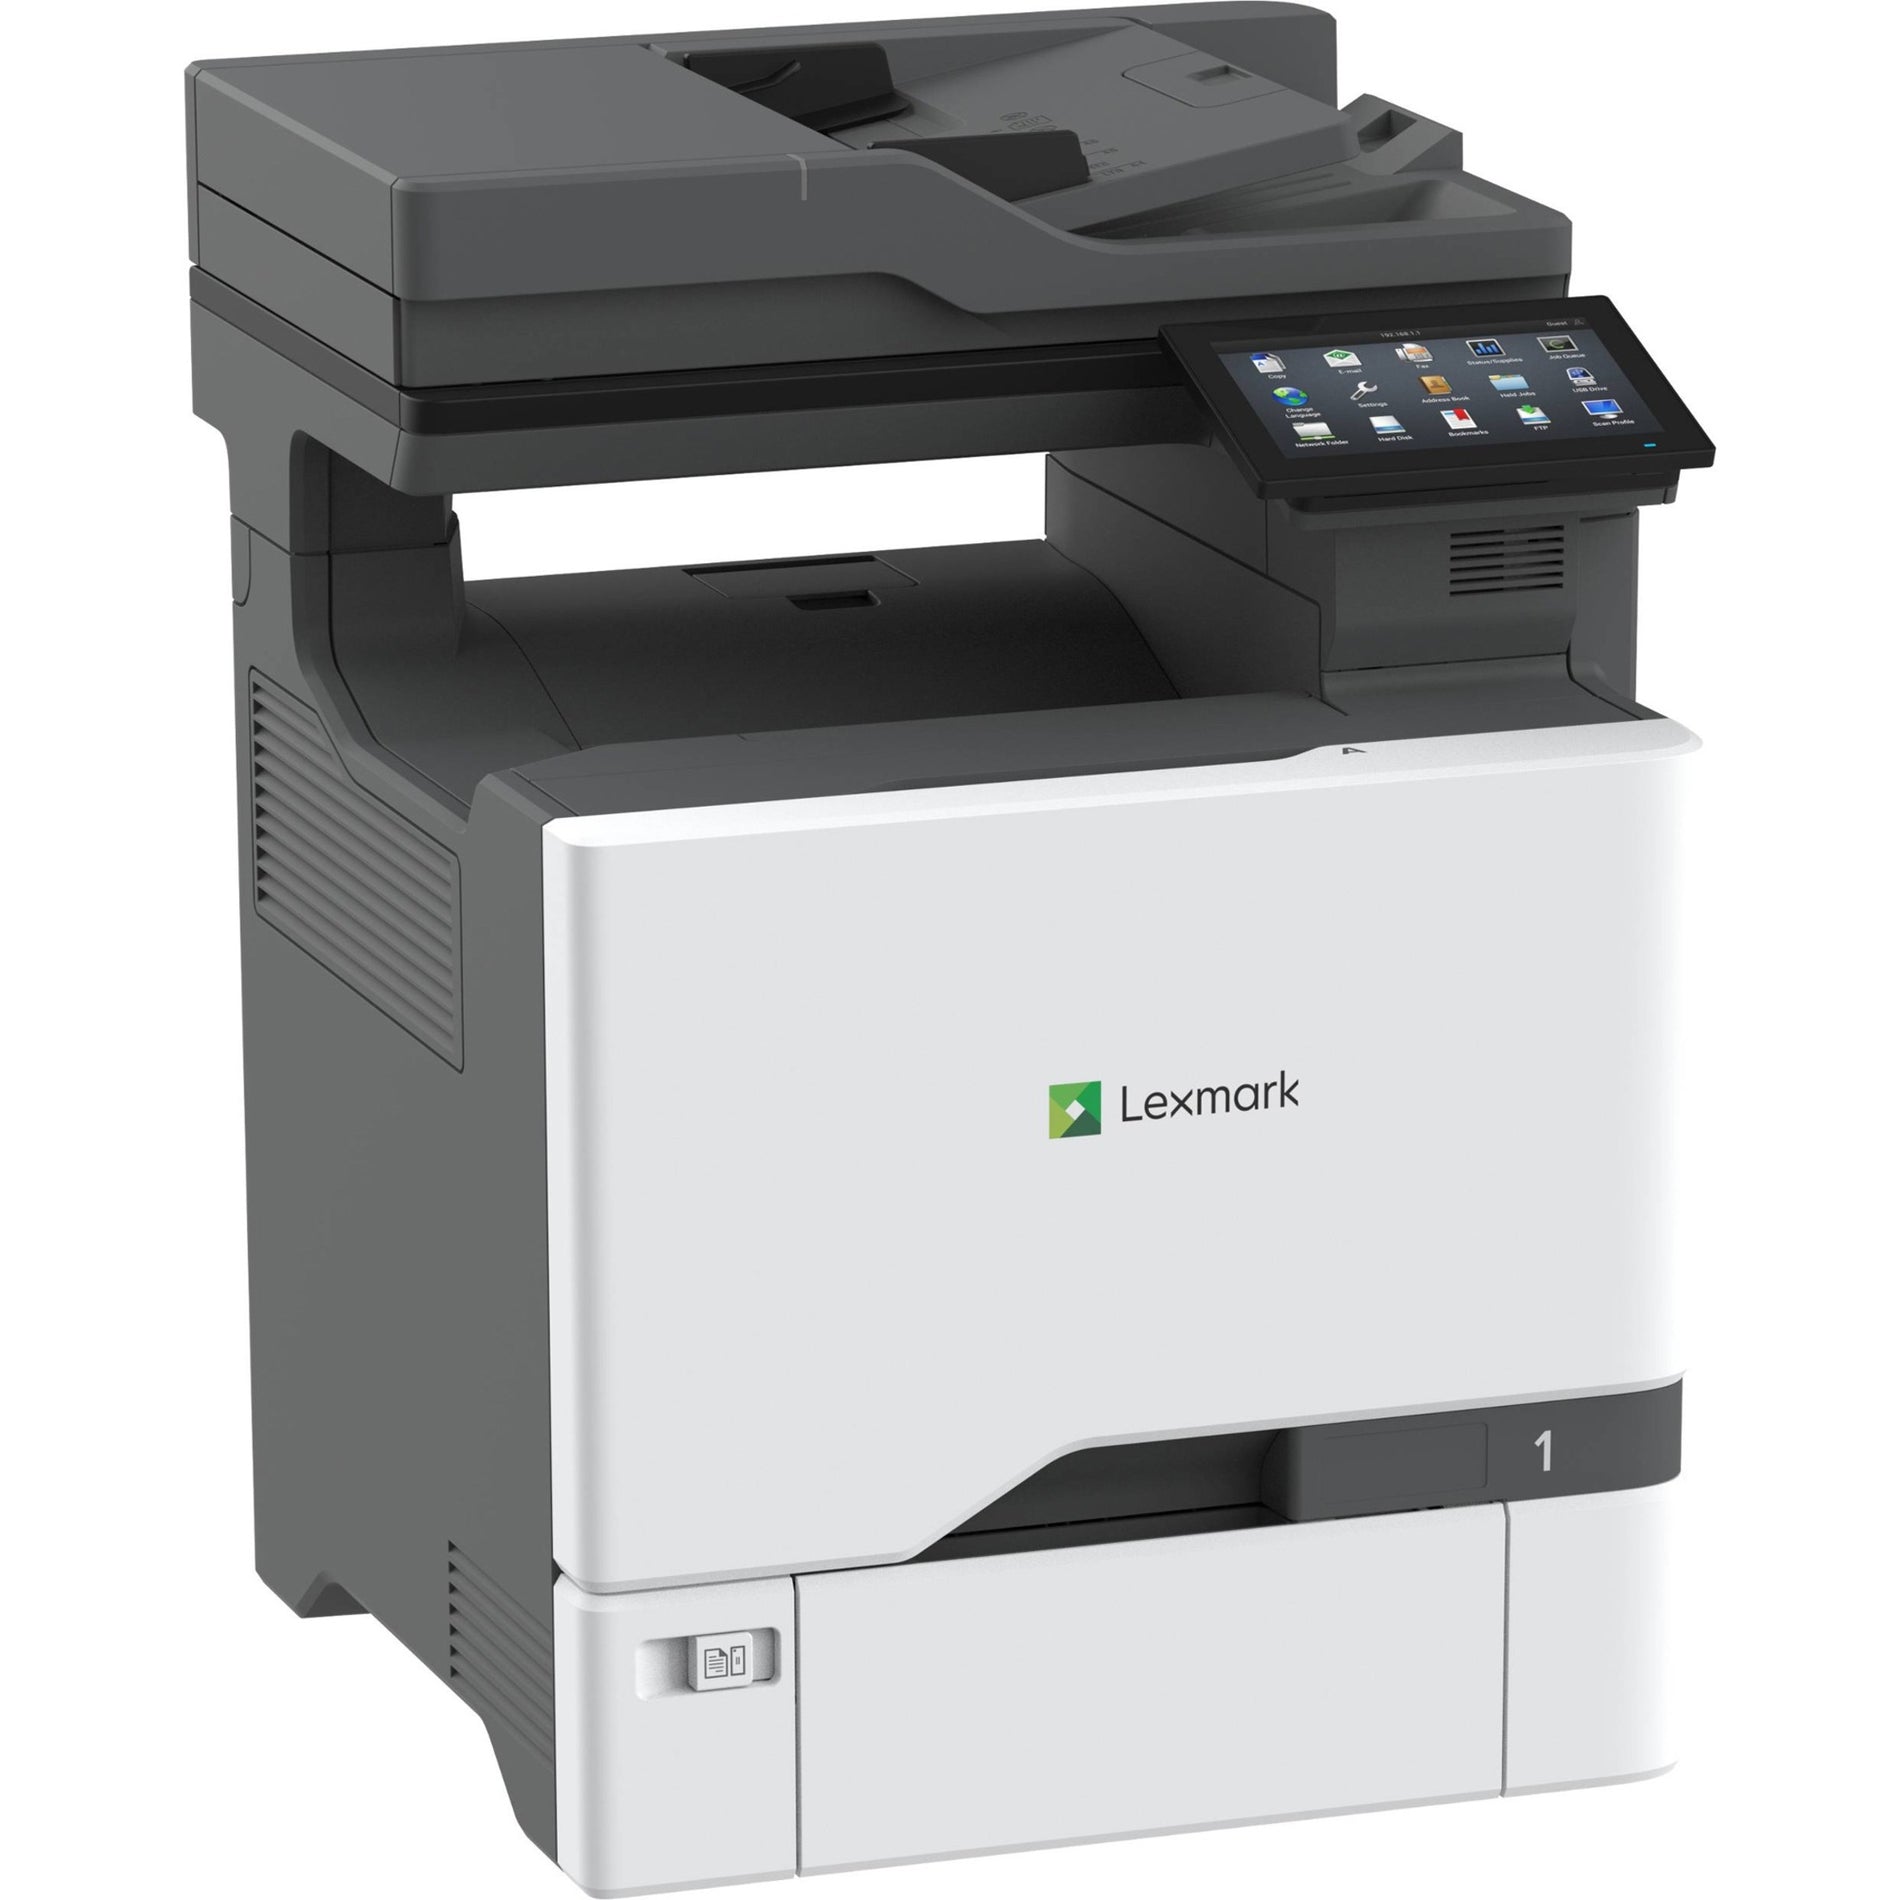 Lexmark 47C9500 CX730de カラーレーザー多機能プリンター、自動両面印刷、42 ppm印刷速度、2400 x 600 dpi解像度